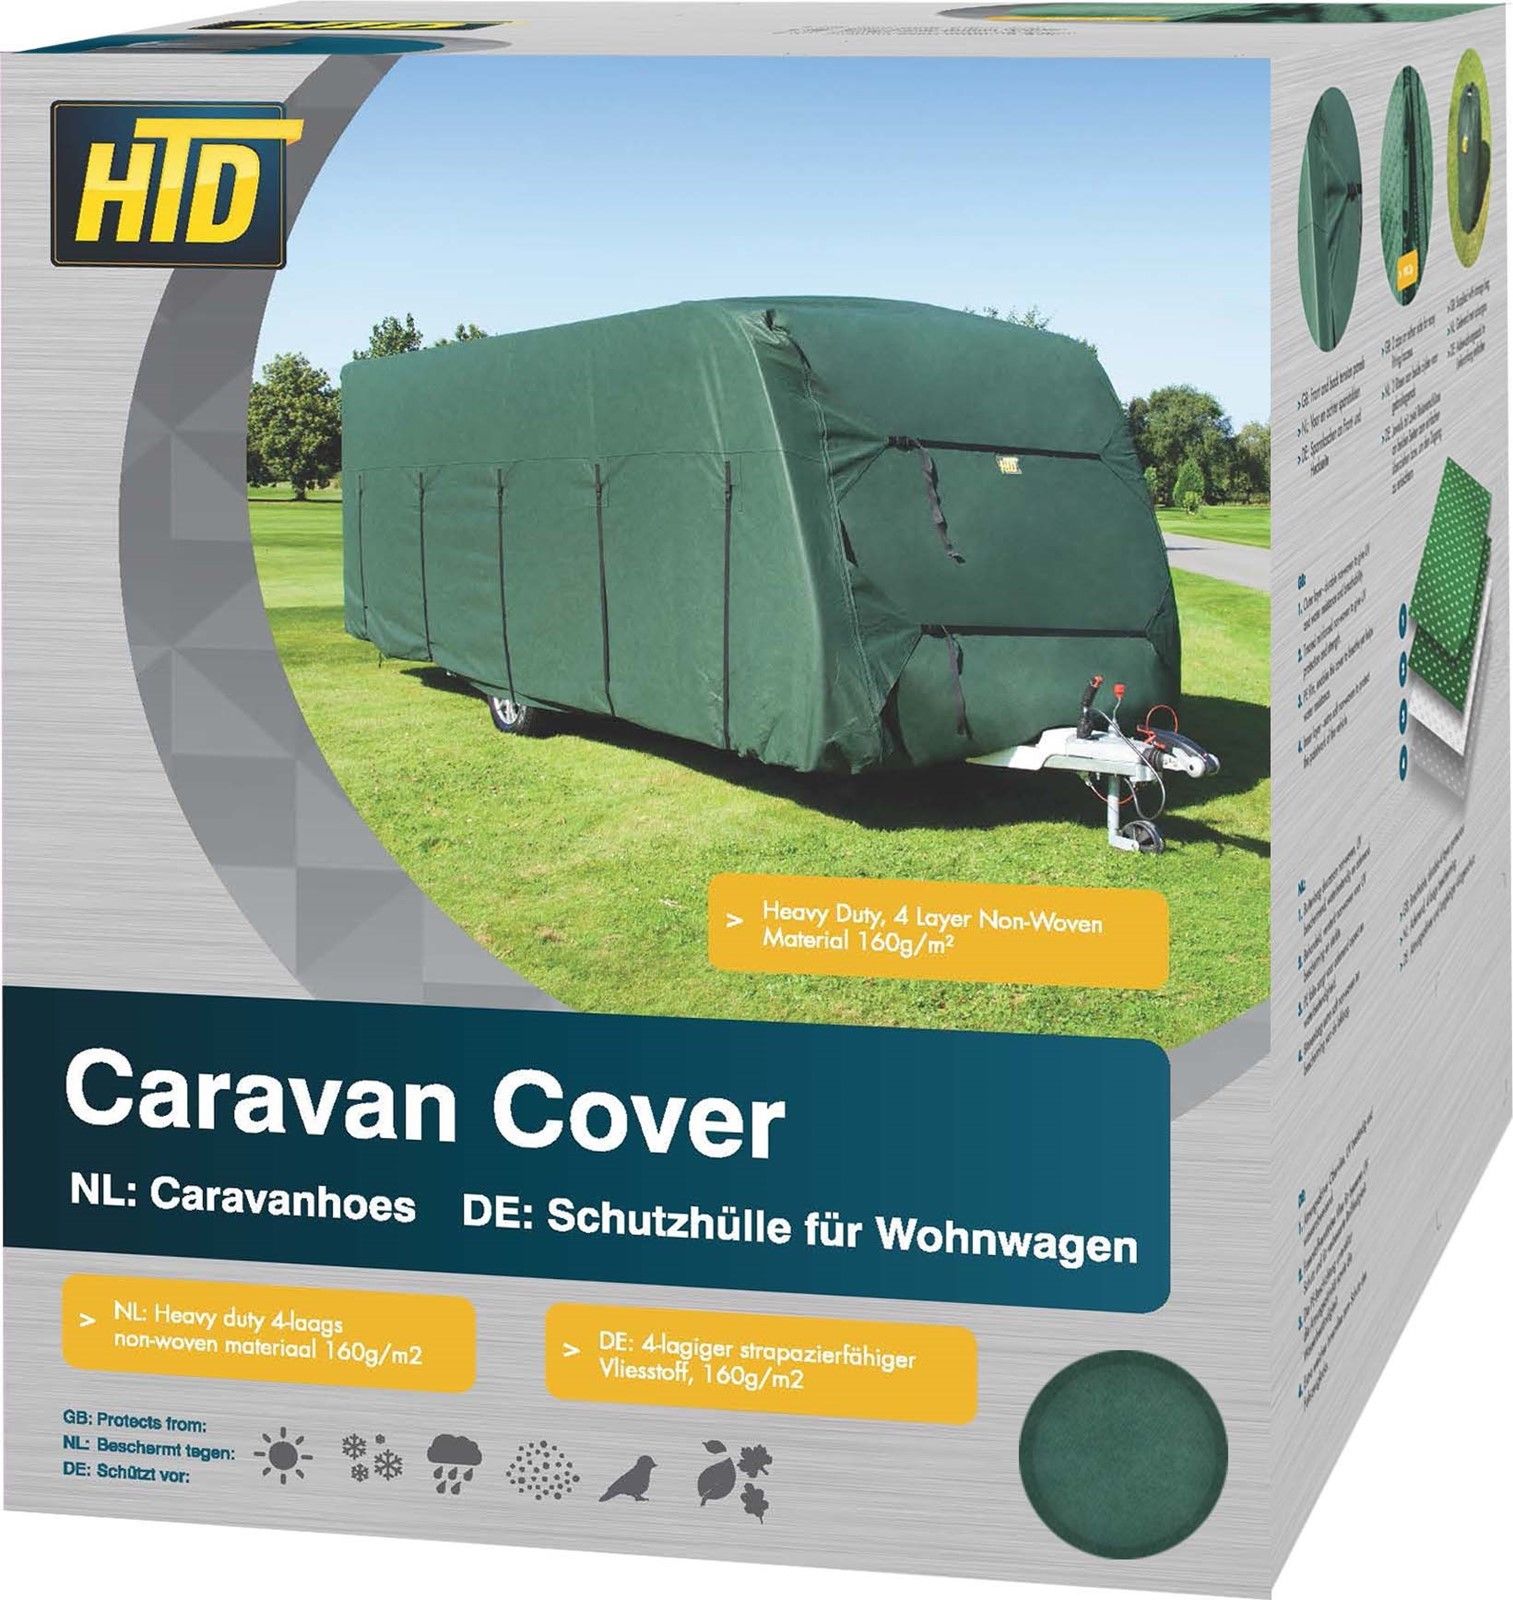 Breathable caravan covers